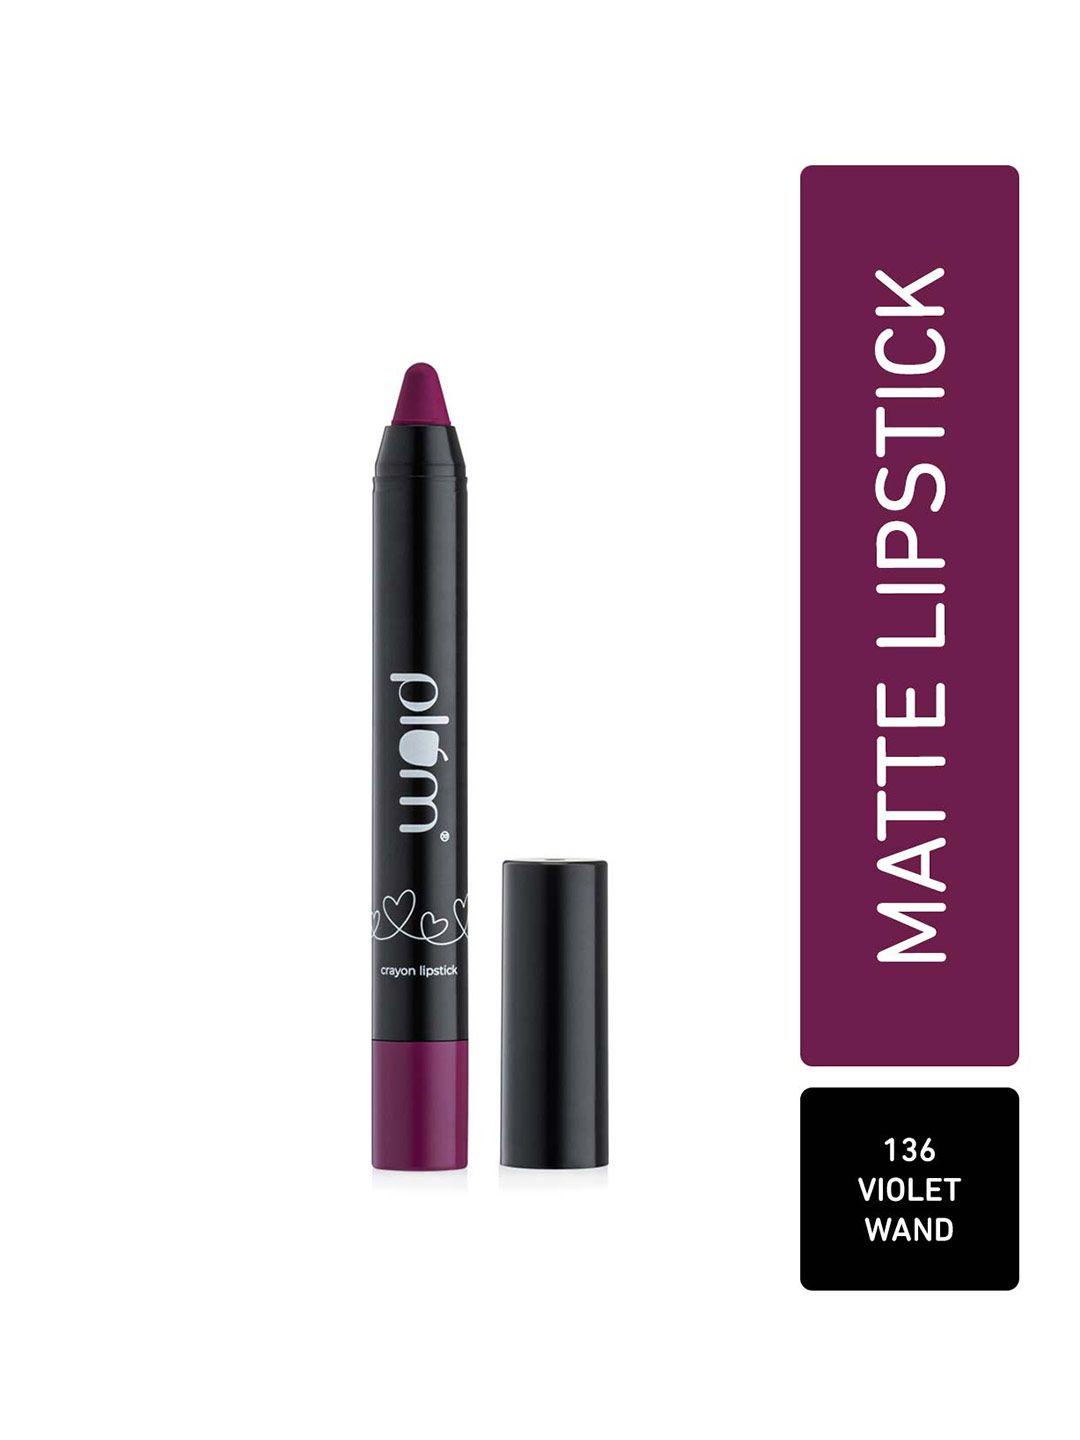 plum twist & go airbrushed finish matte crayon lipstick - violet wand 136